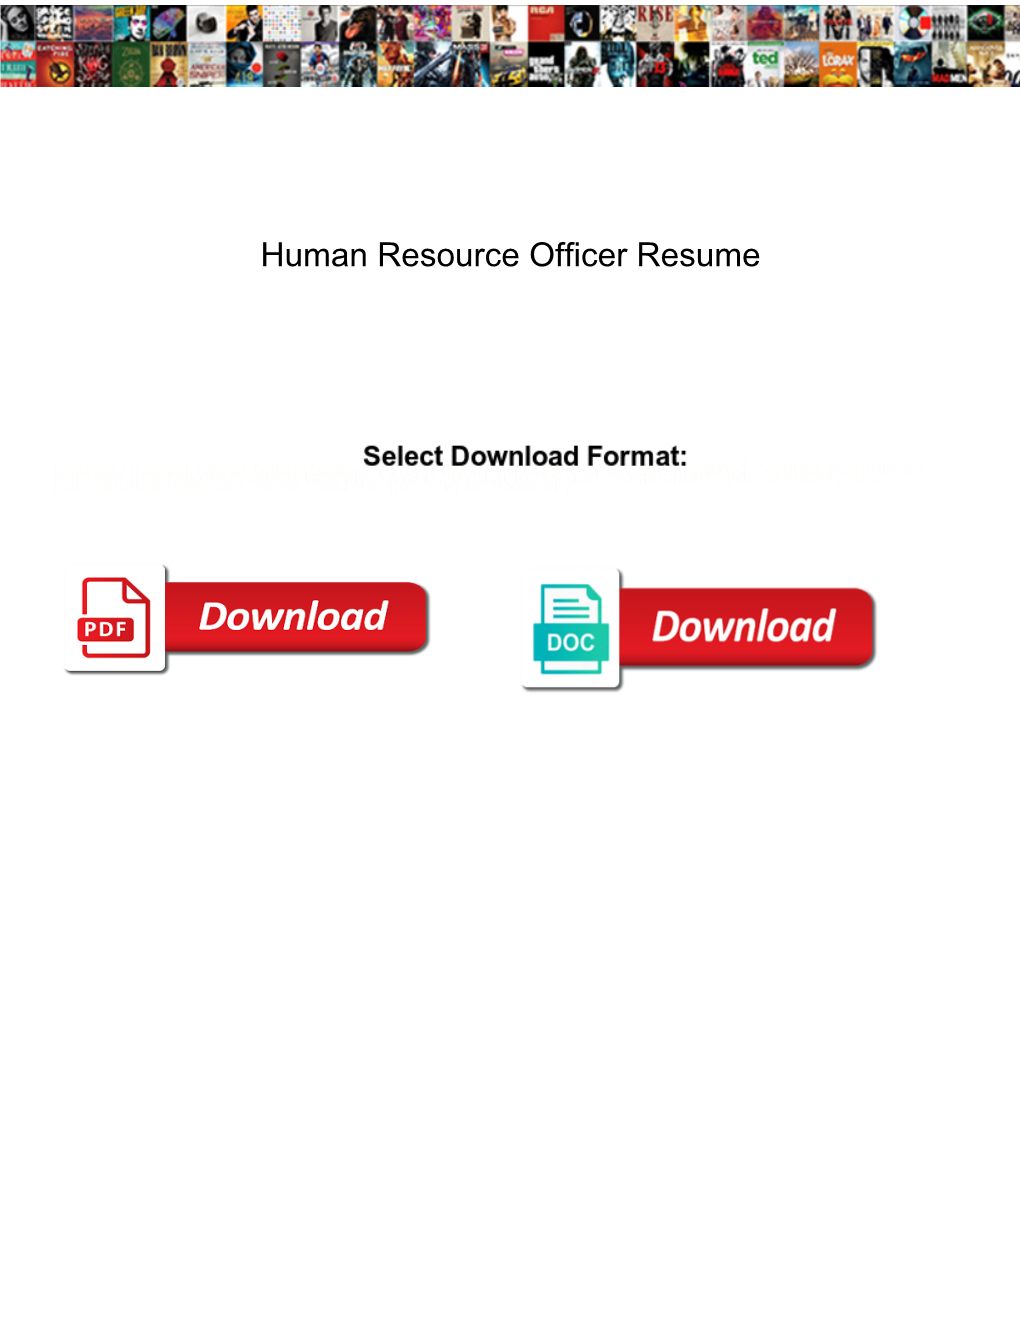 Human Resource Officer Resume